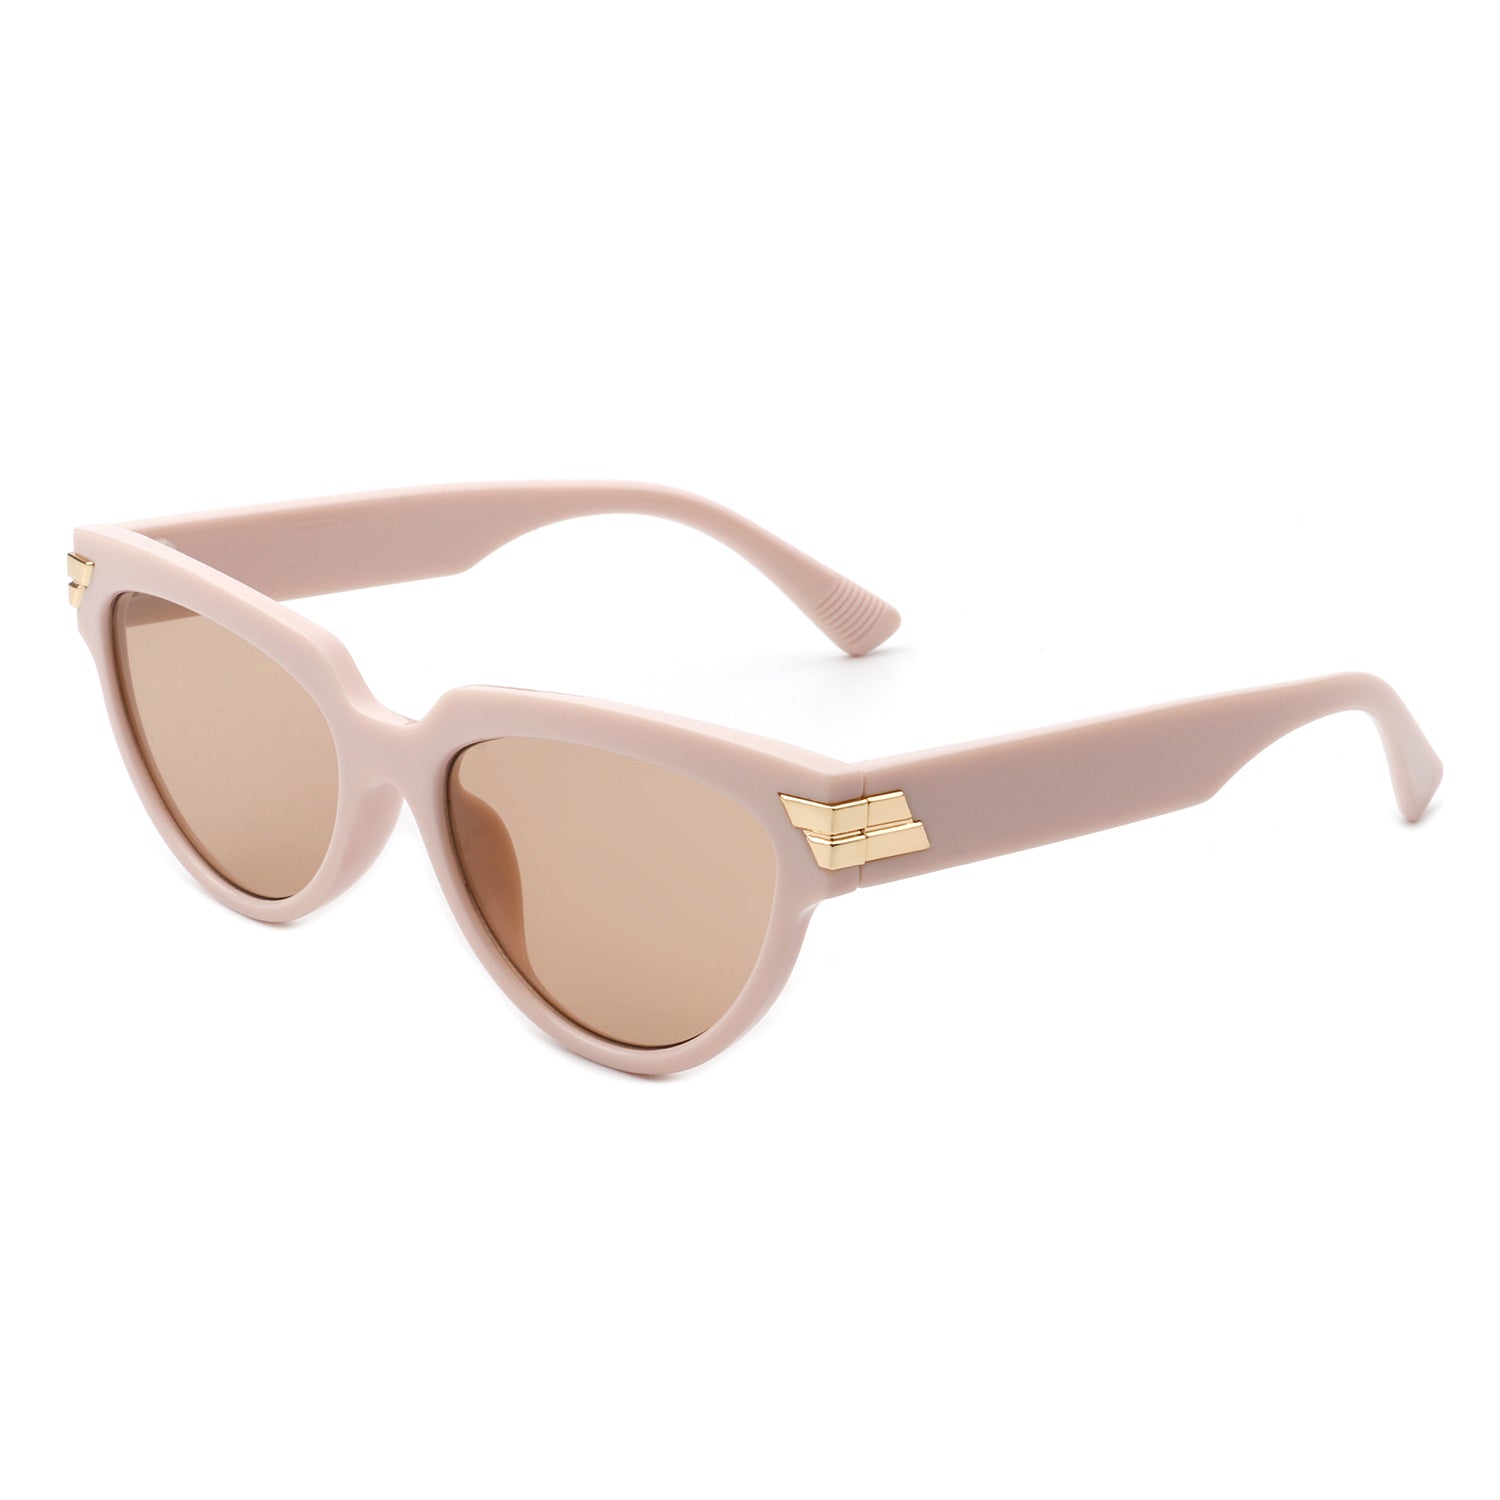 HS2048 - Women Retro Fashion Round Cat Eye Sunglasses